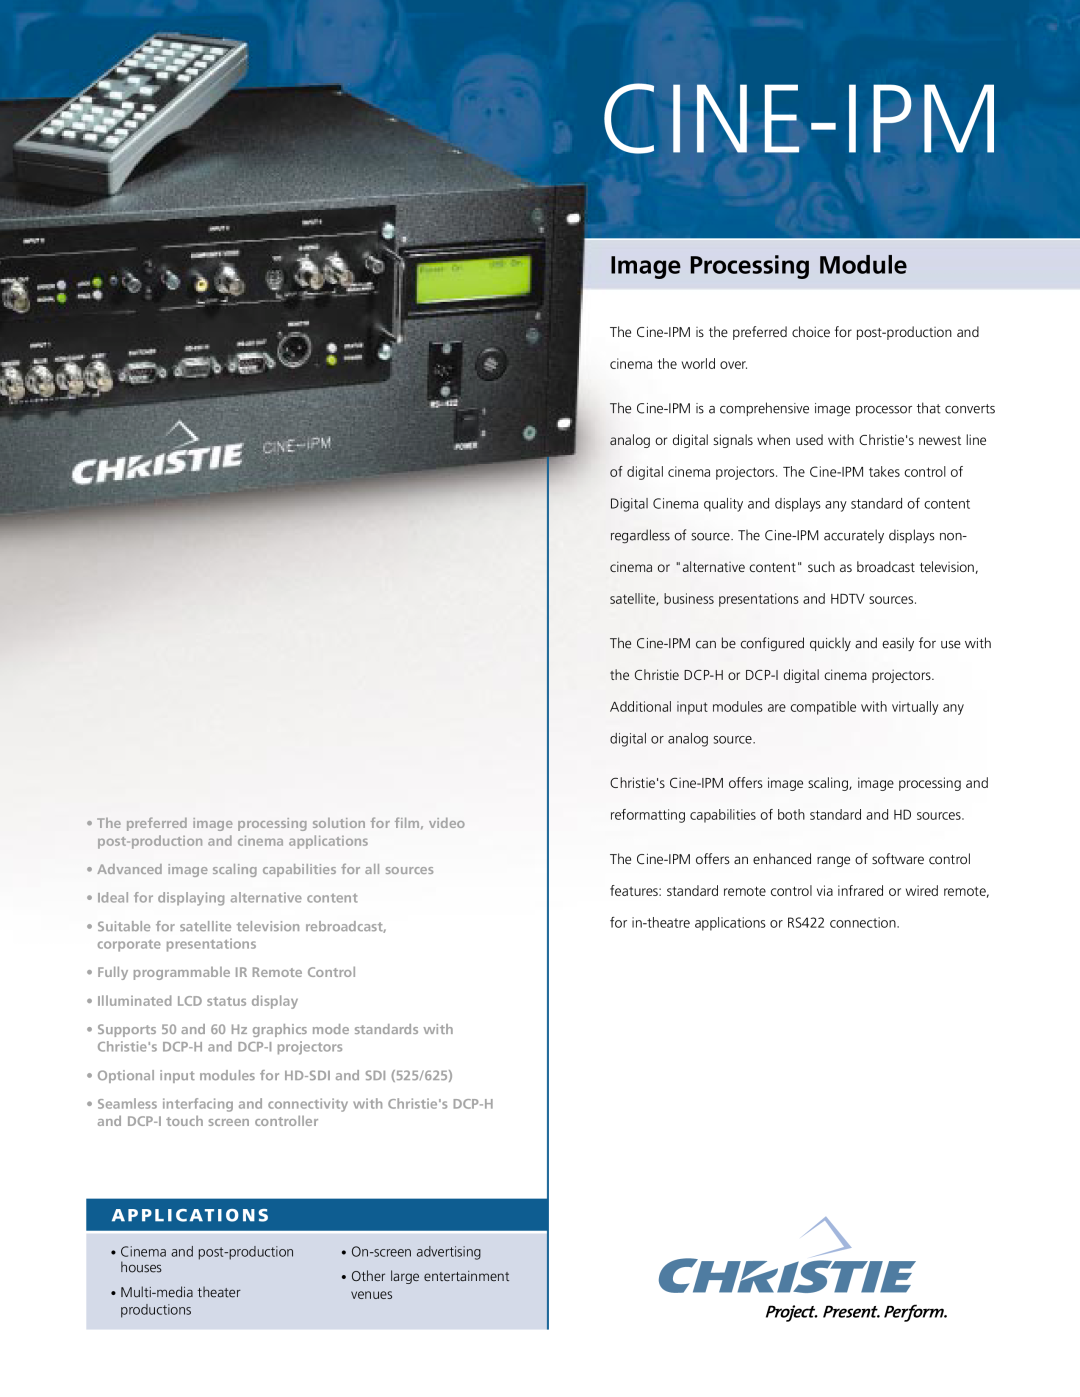 Christie Digital Systems Cine-IPM manual A P P L I C At I O N S, Cine-Ipm, Image Processing Module 